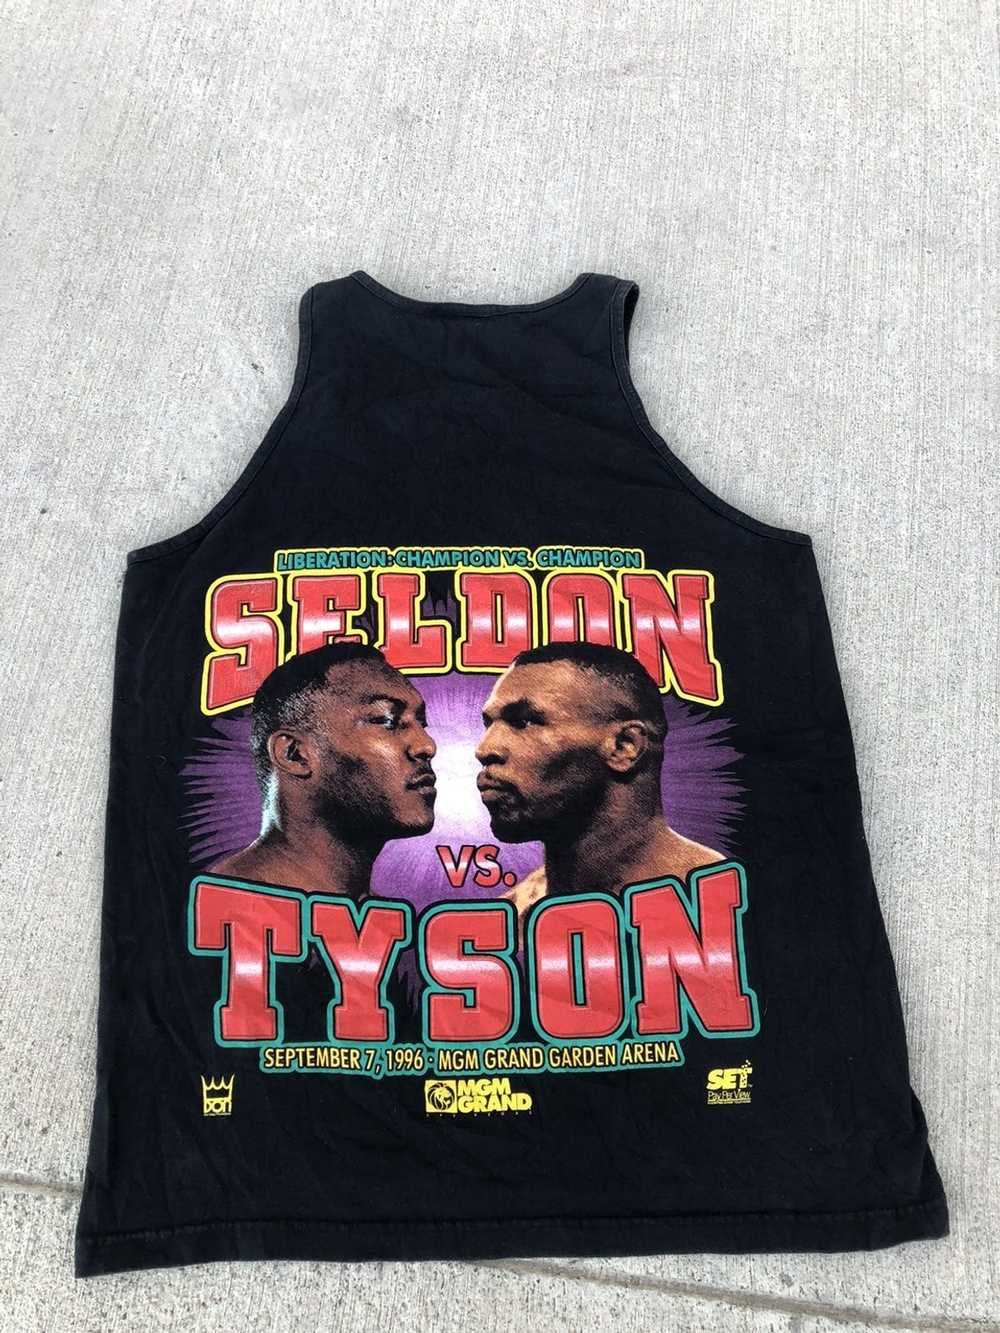 Vintage Vintage mike Tyson boxing shirt - image 2